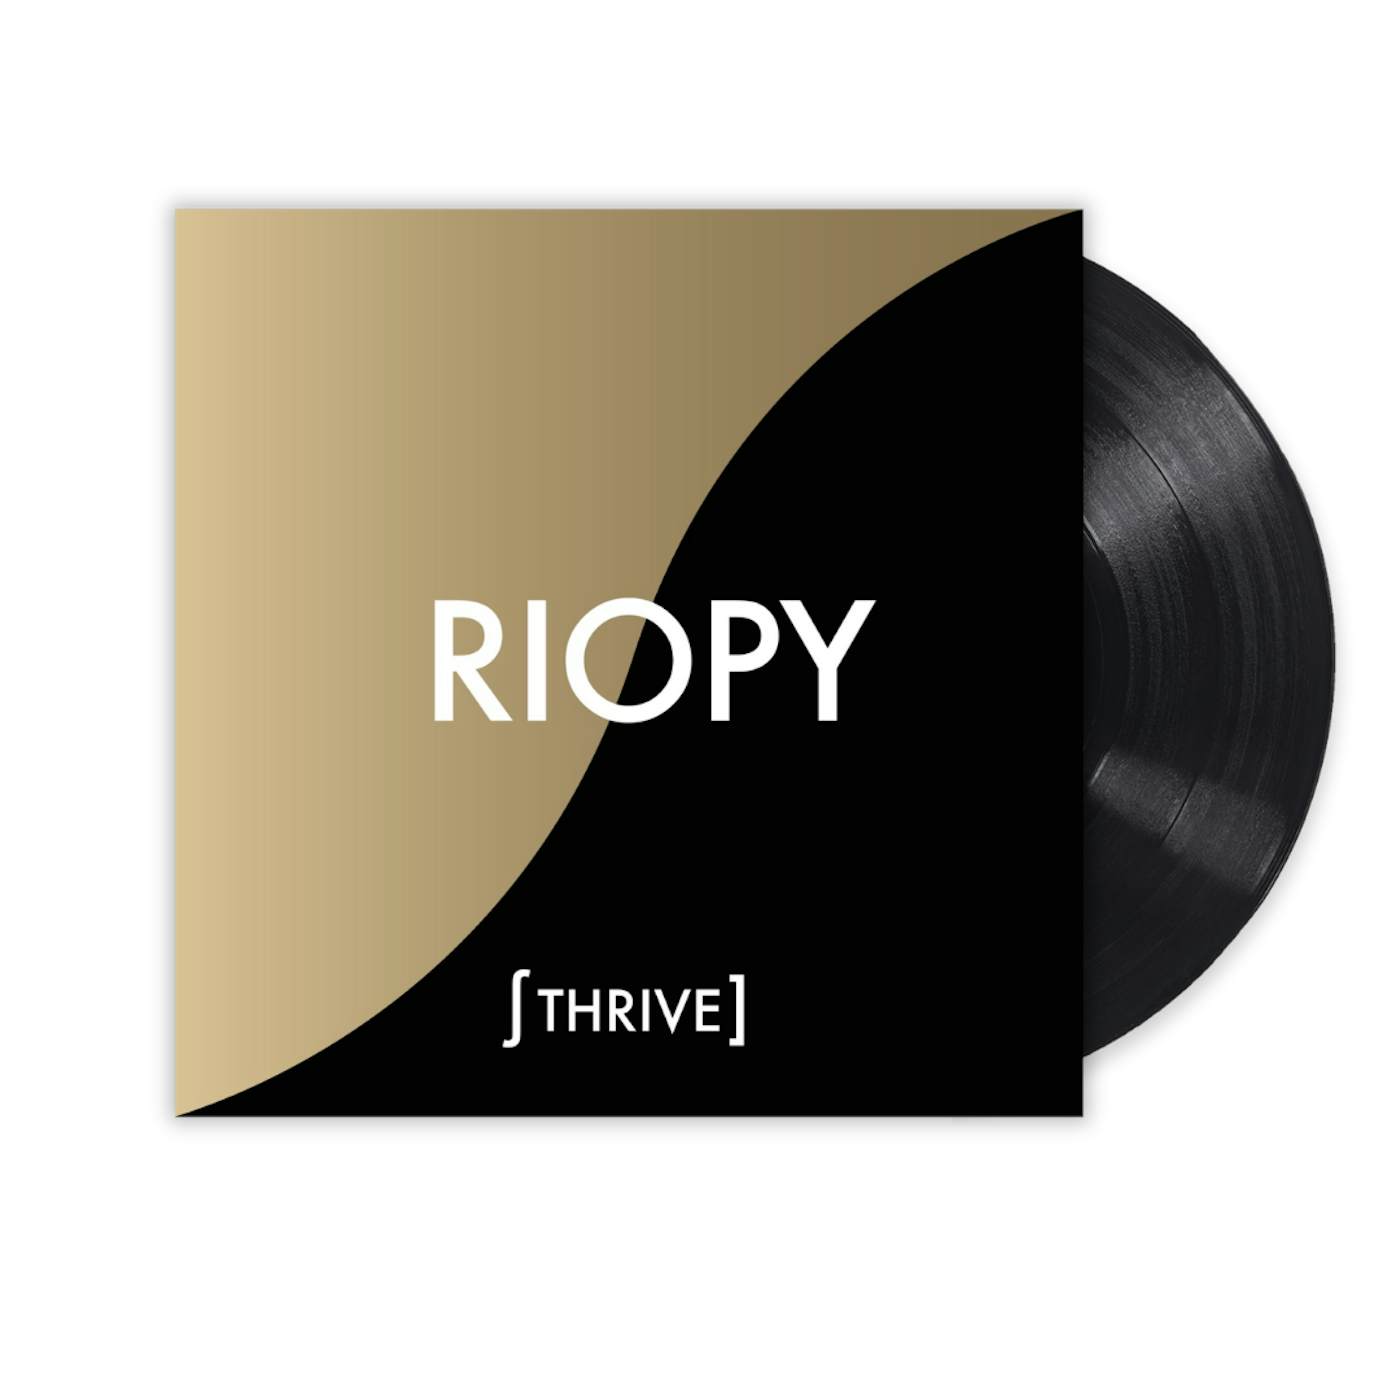 RIOPY Thrive (Signed vinyl)